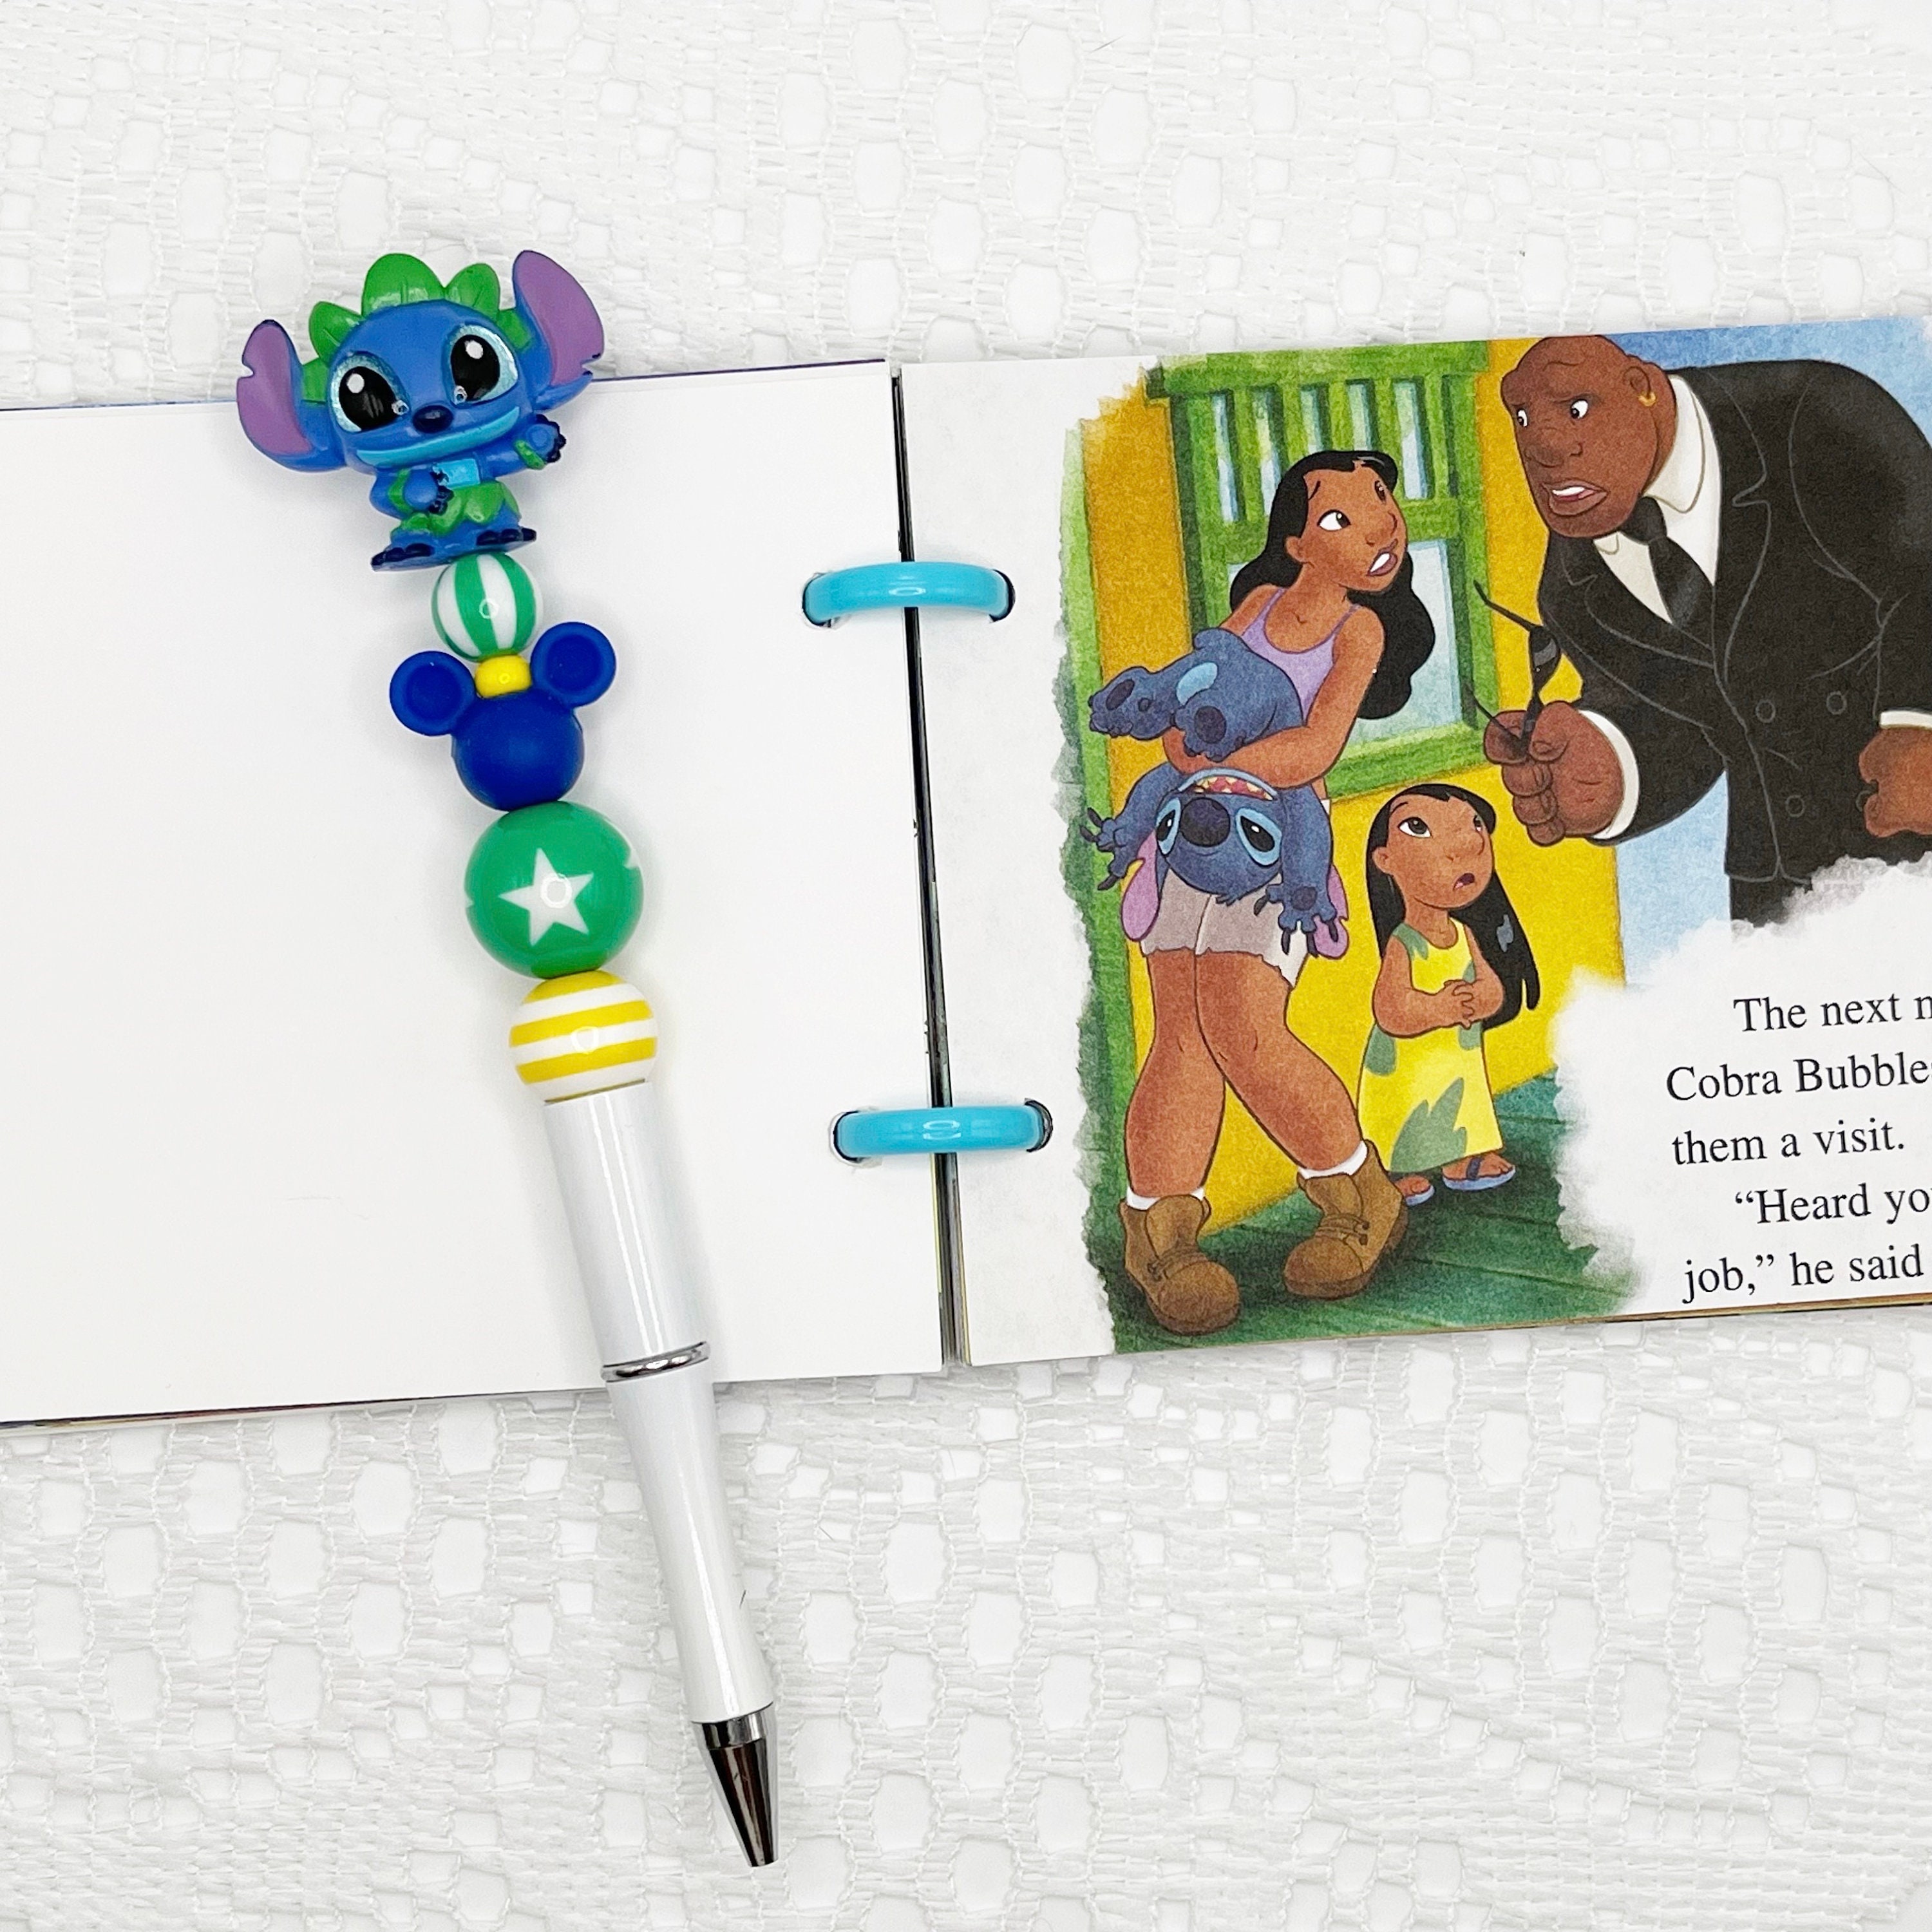 Set libro de autógrafos y bolígrafo princesas Disney, Disney Store